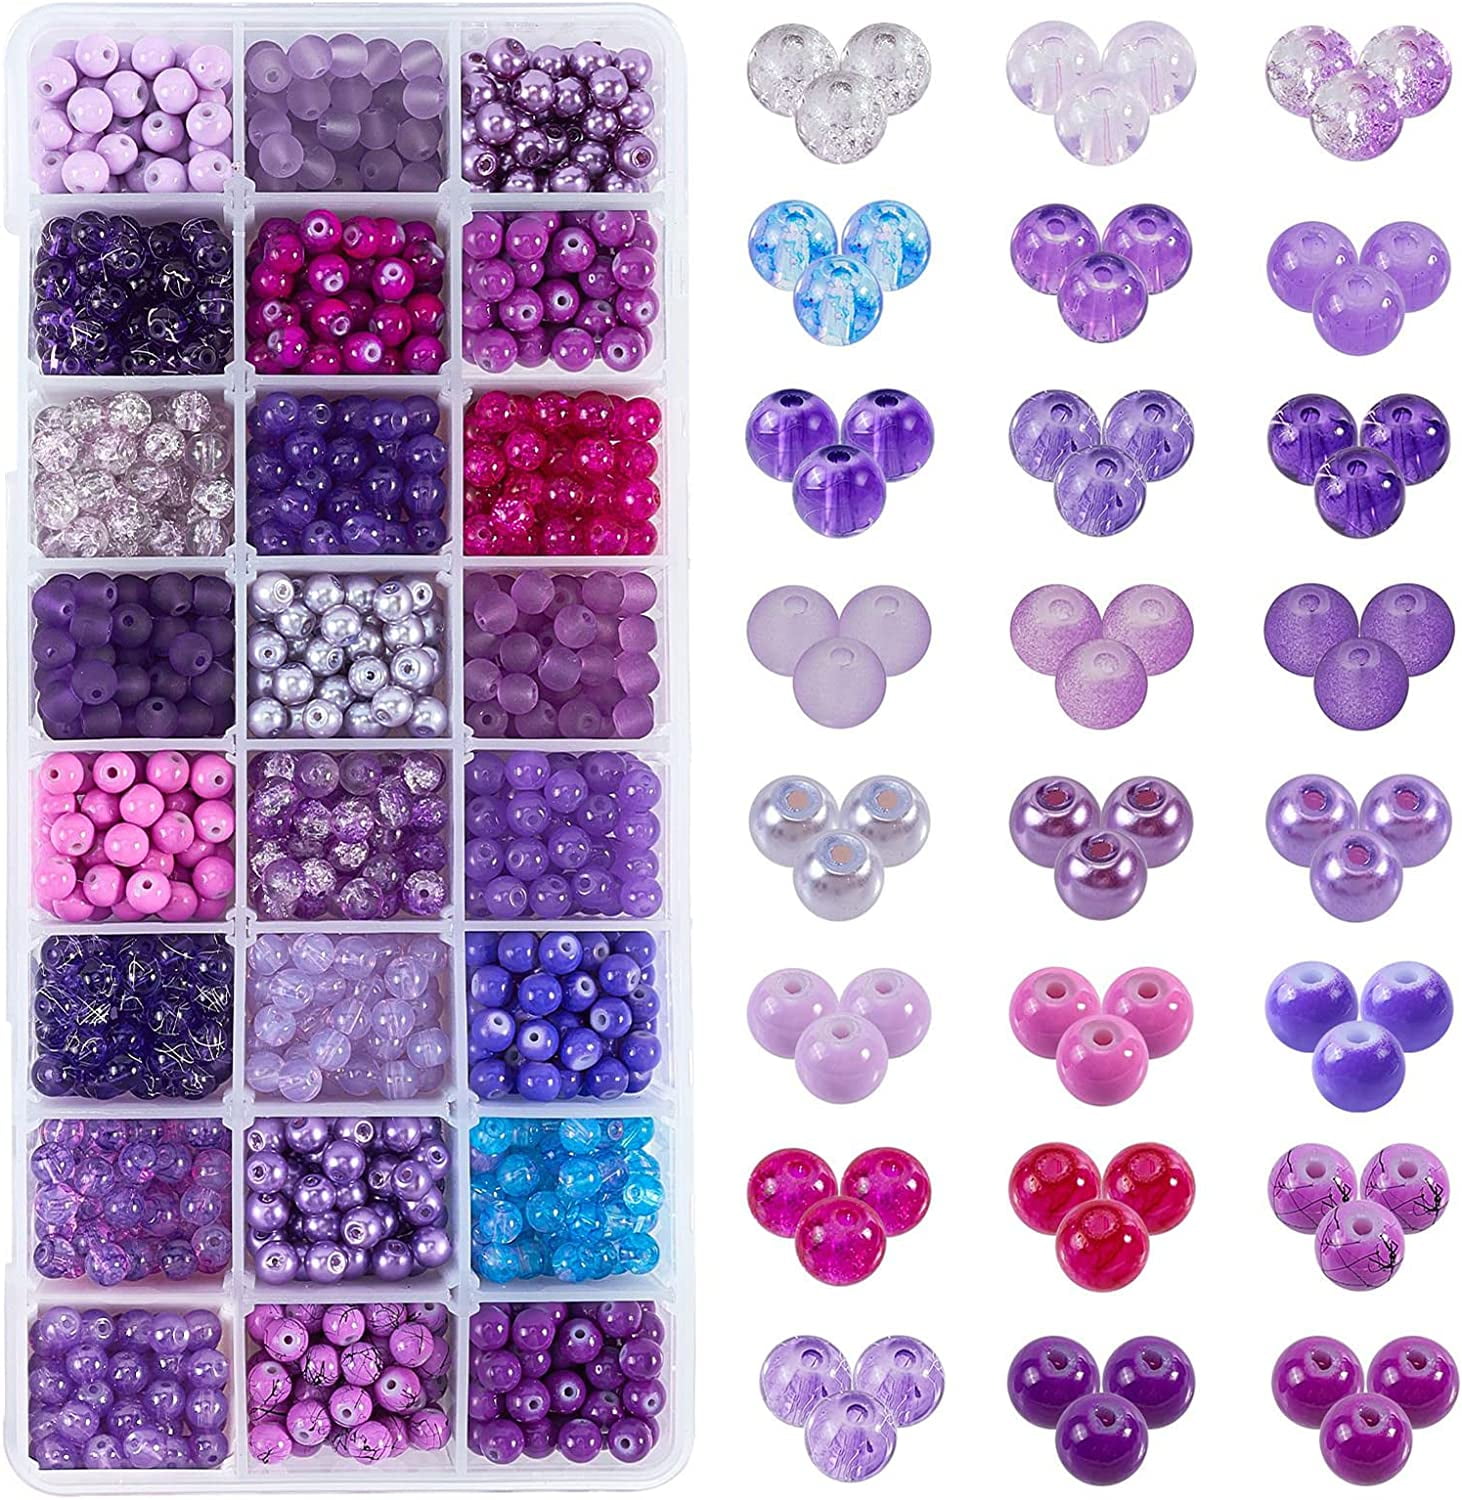 NEW! Right Angle Weave Glass Bead Bracelet Kit (Purple) –